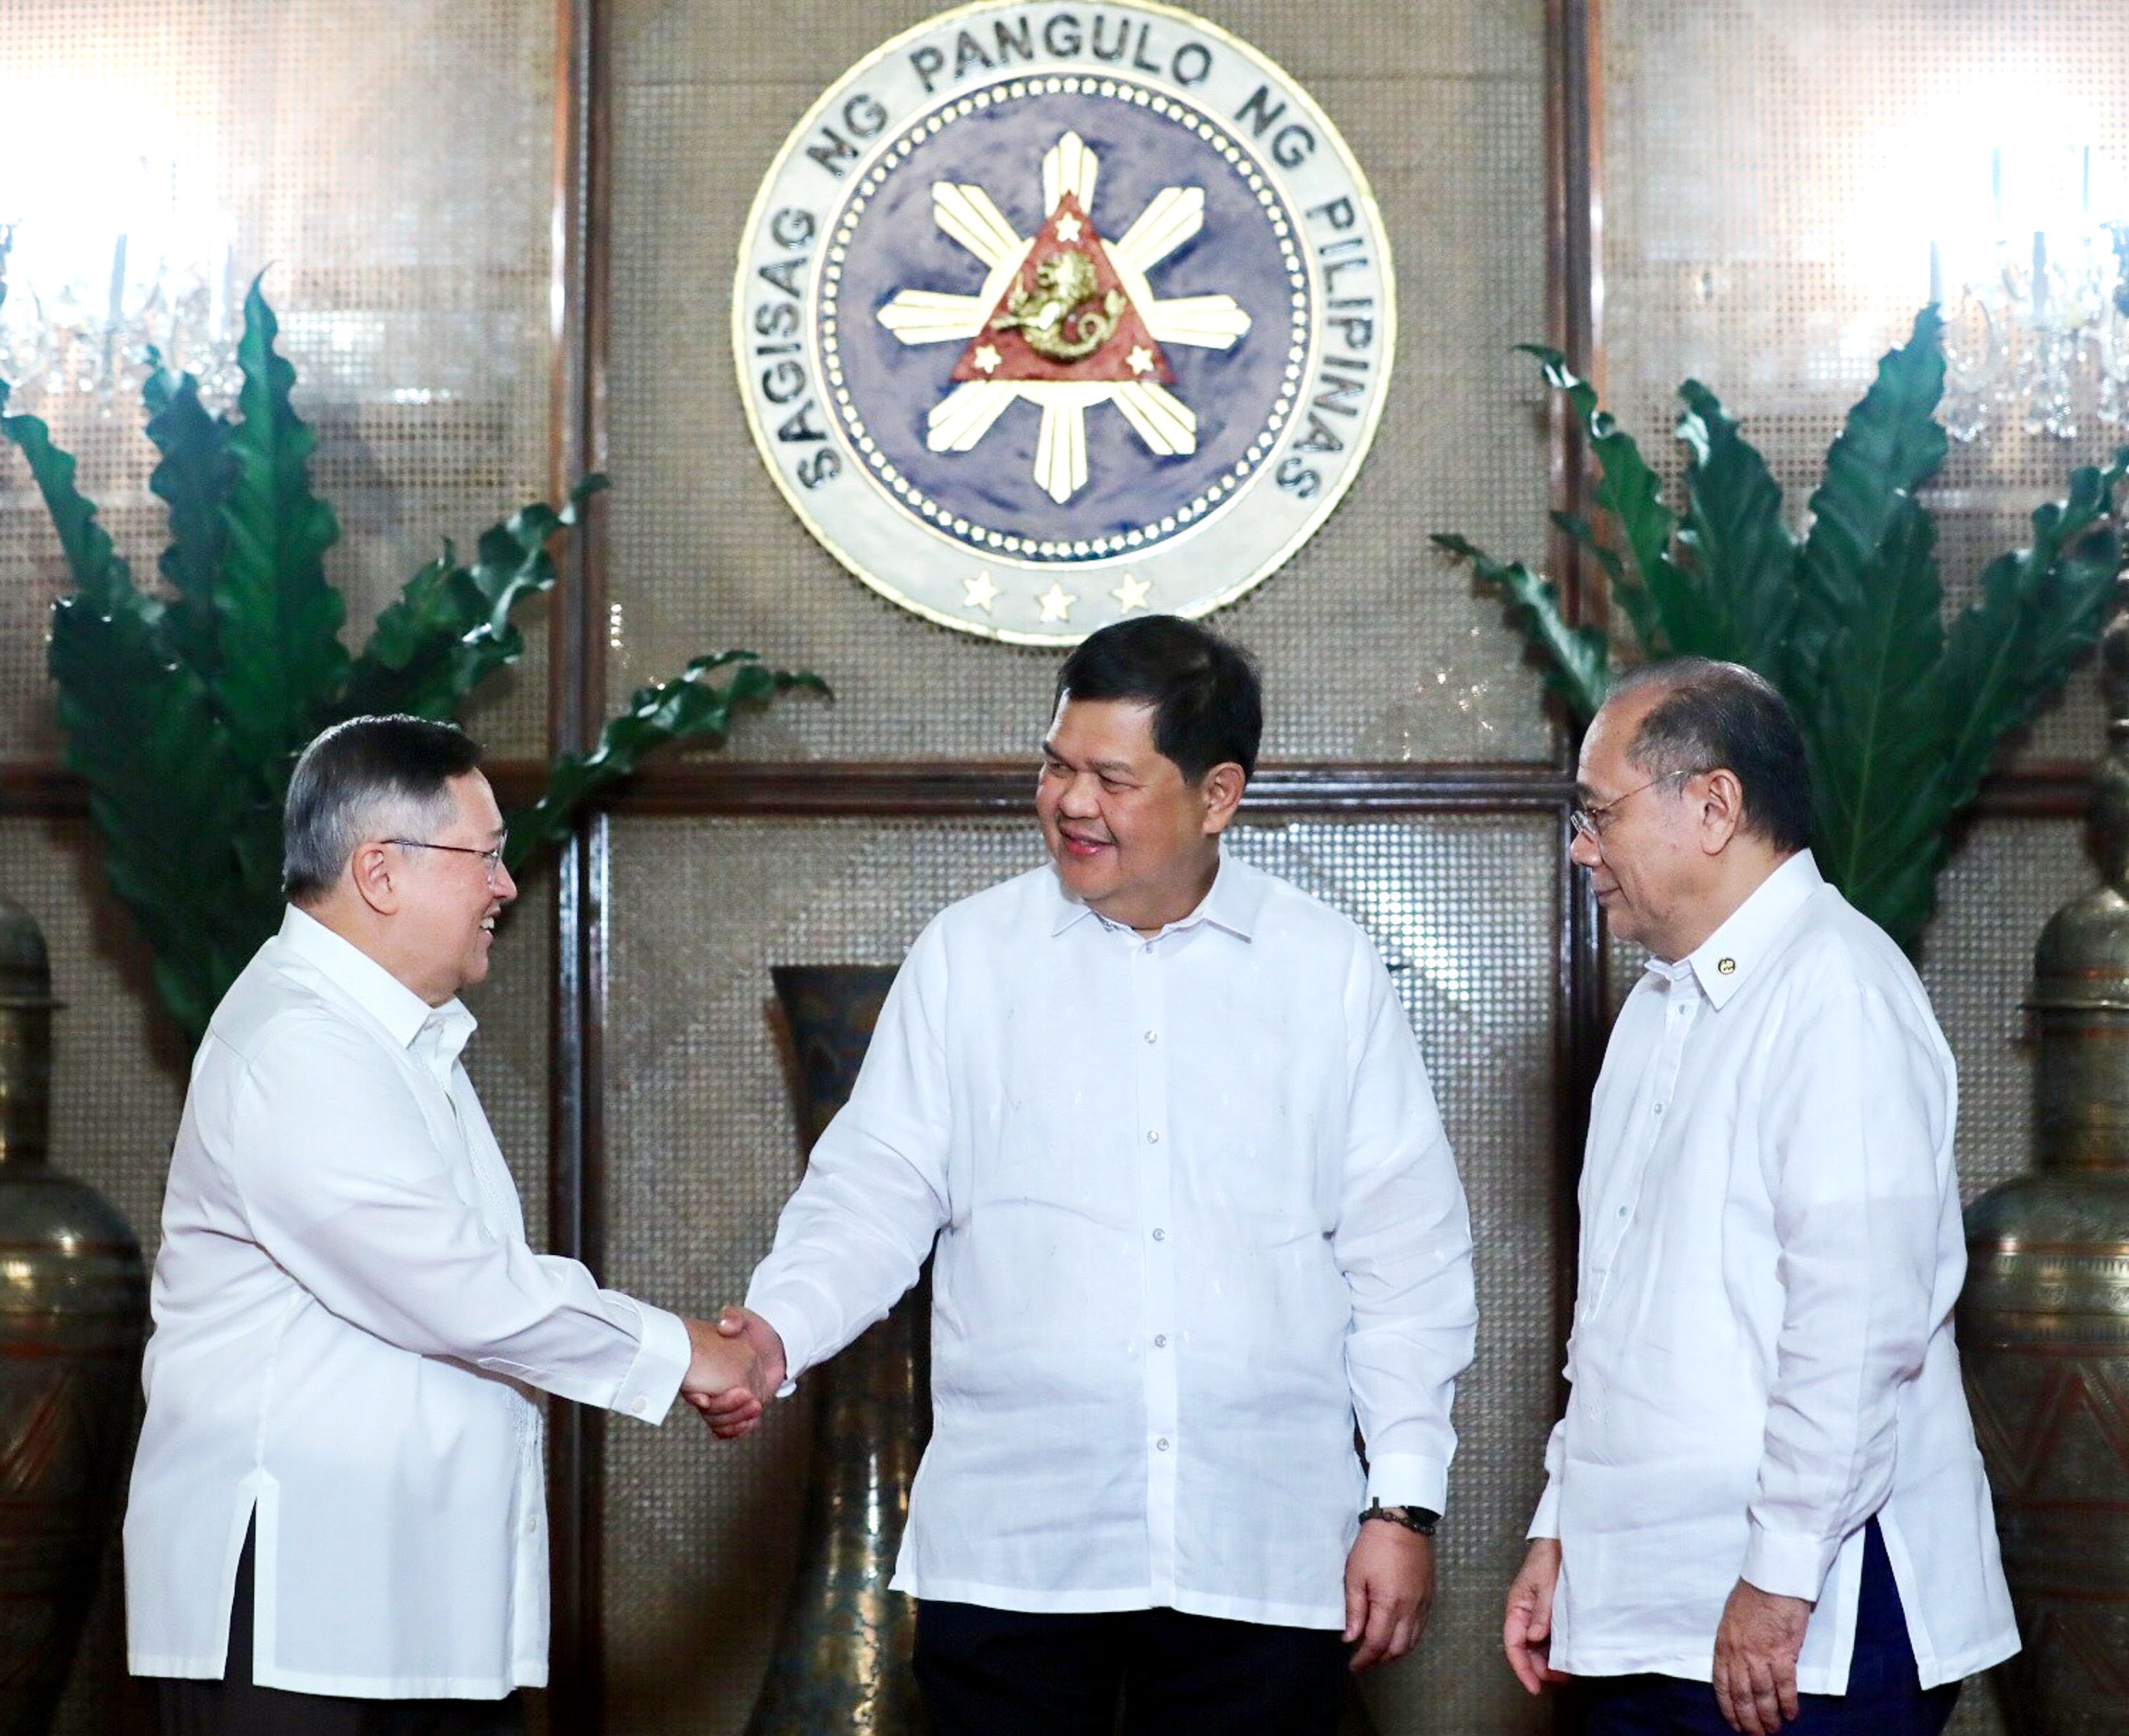 Finance Secretary Dominguez III congratulates newly-appointed Bangko Sentral ng Pilipinas (BSP) Governor Nestor Espenilla Jr.